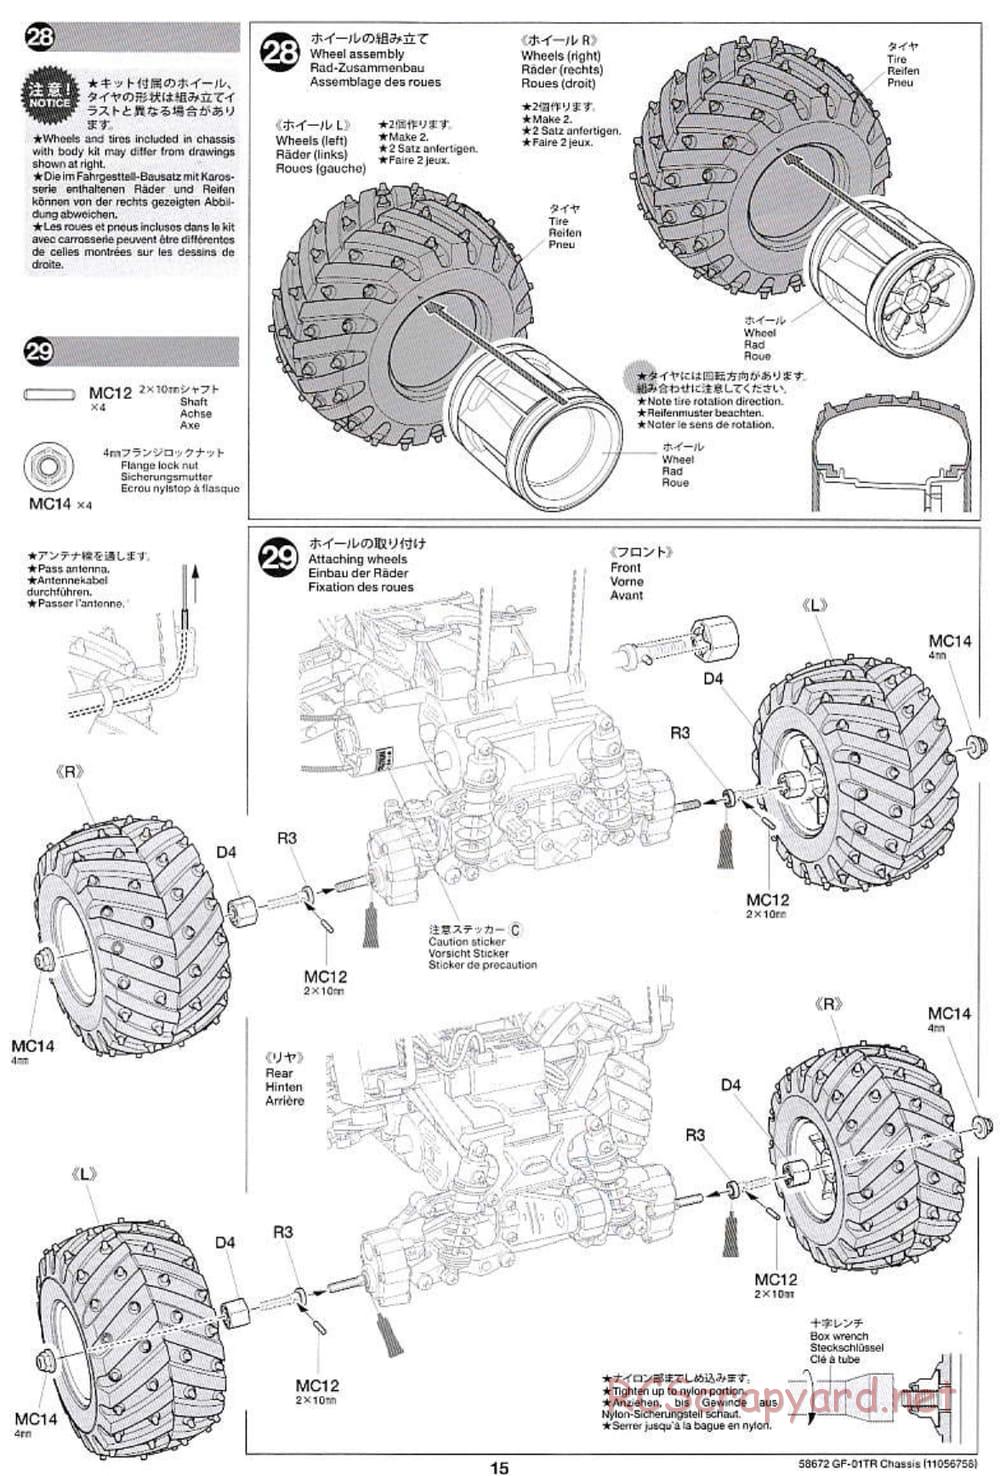 Tamiya - Monster Beetle Trail - GF-01TR Chassis - Manual - Page 15